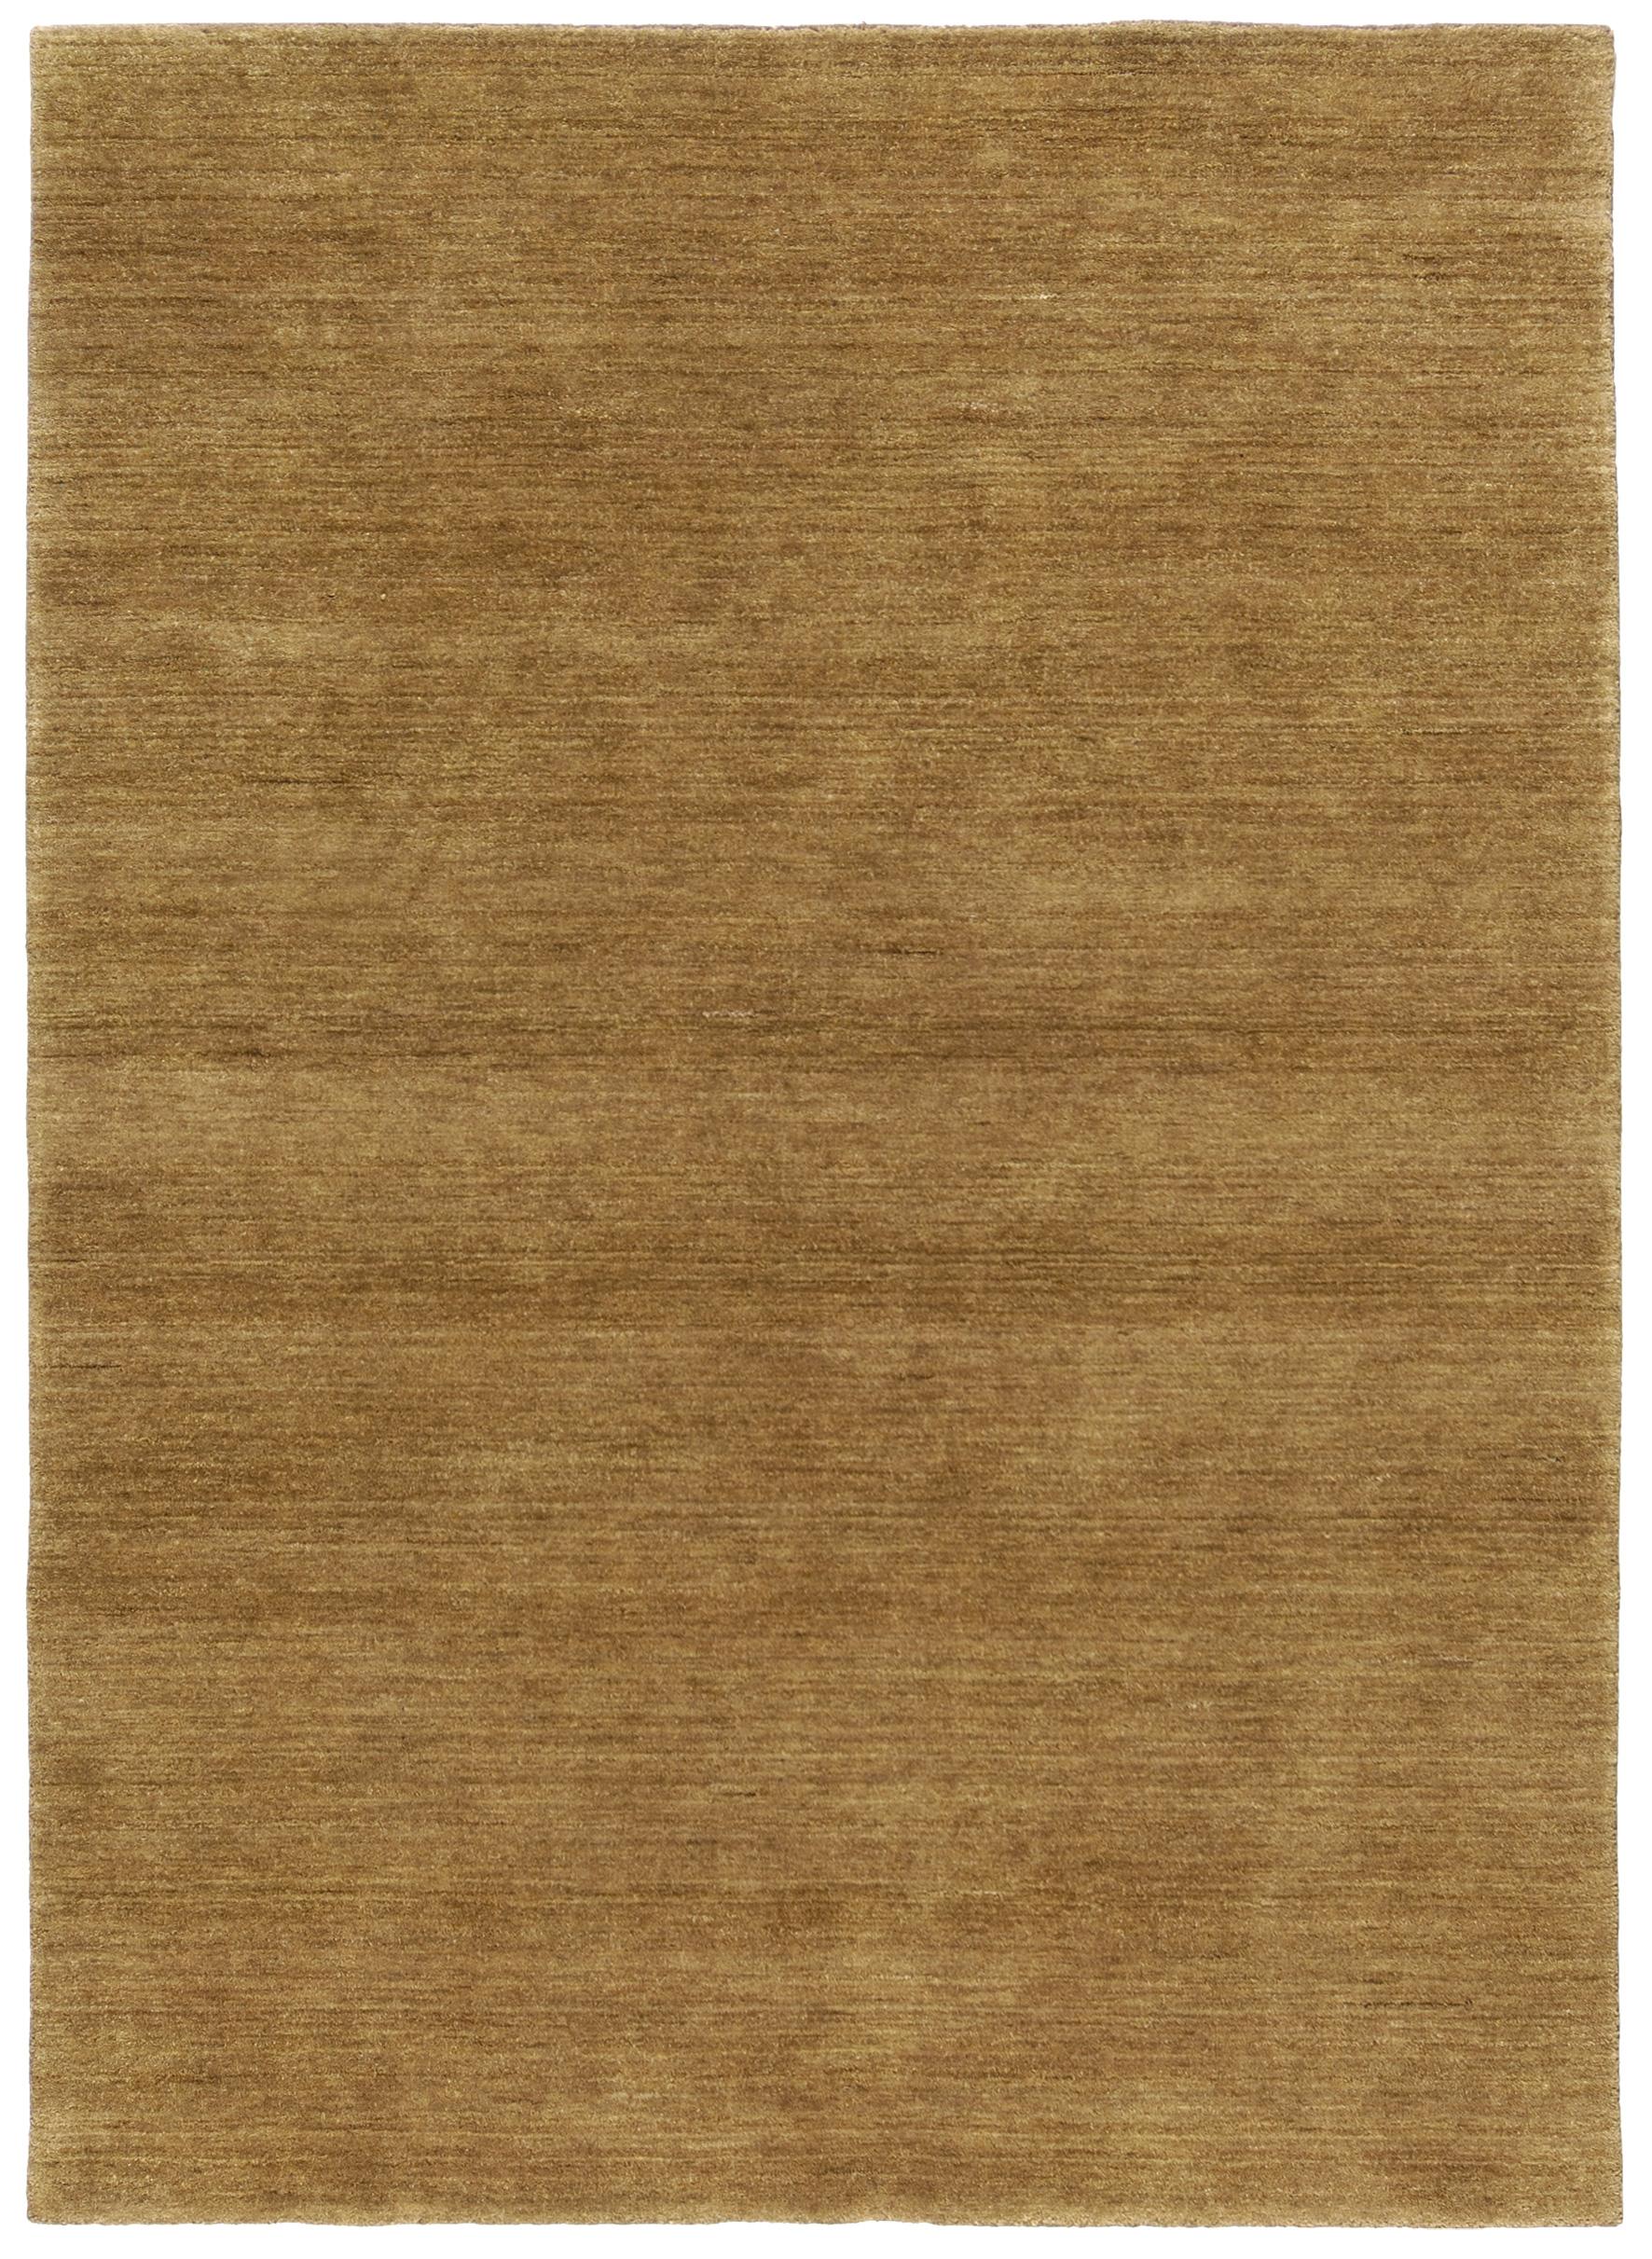 Wool  Sand Tan από 240 x 170